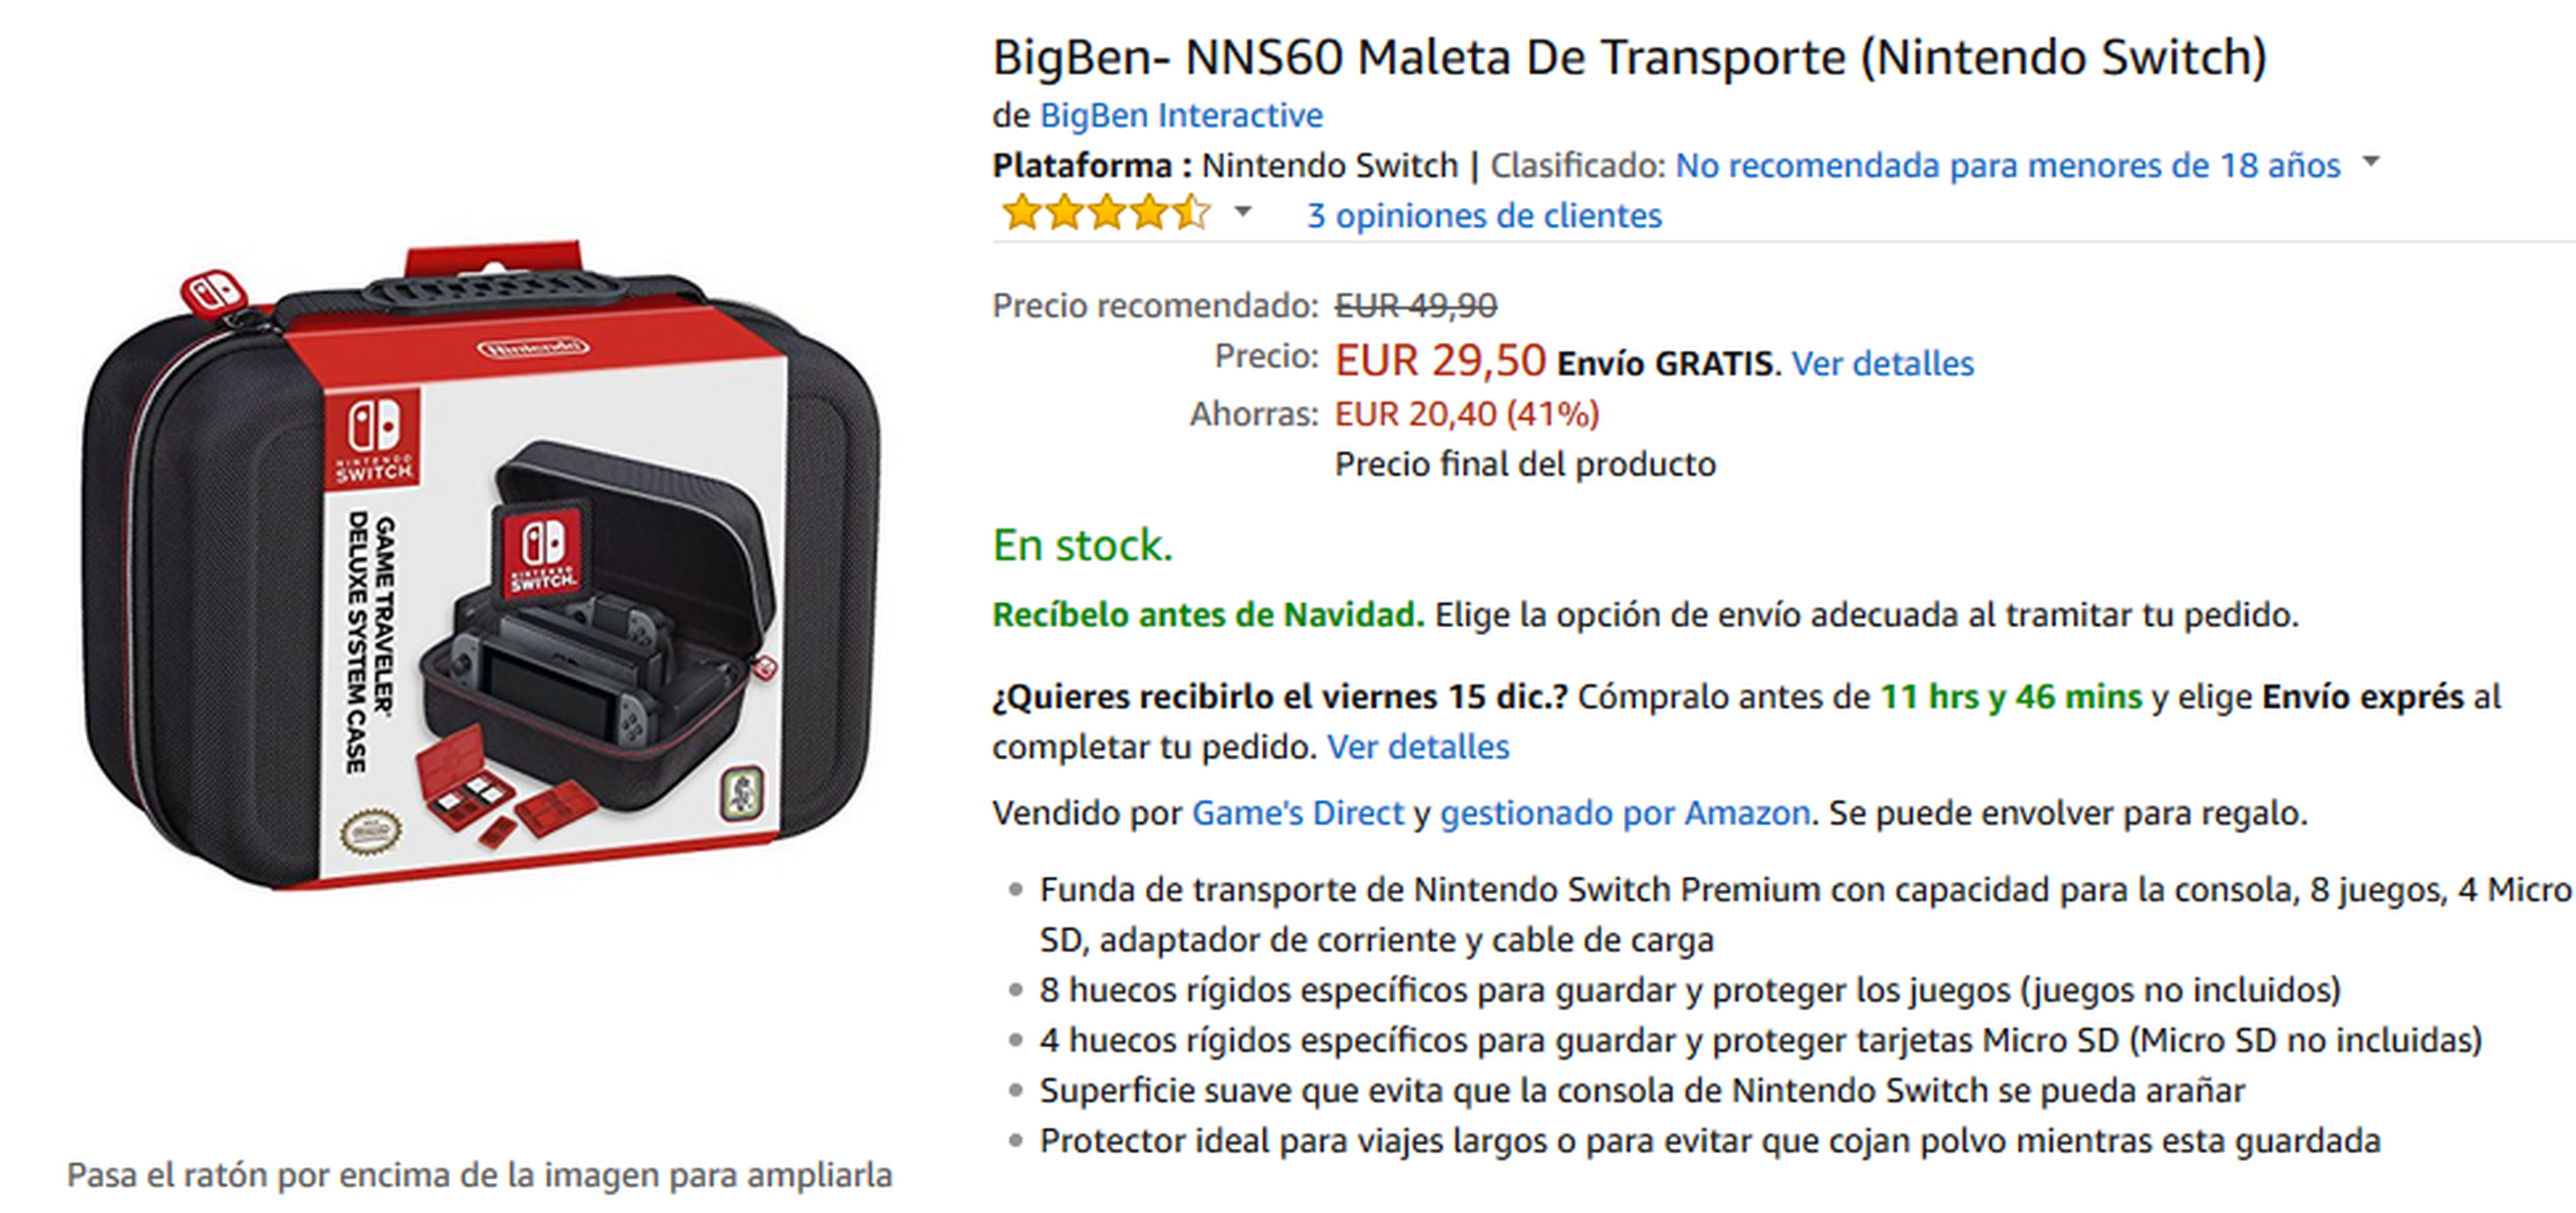 Maleta de Transporte NNS60 de BigBen para Nintendo Switch